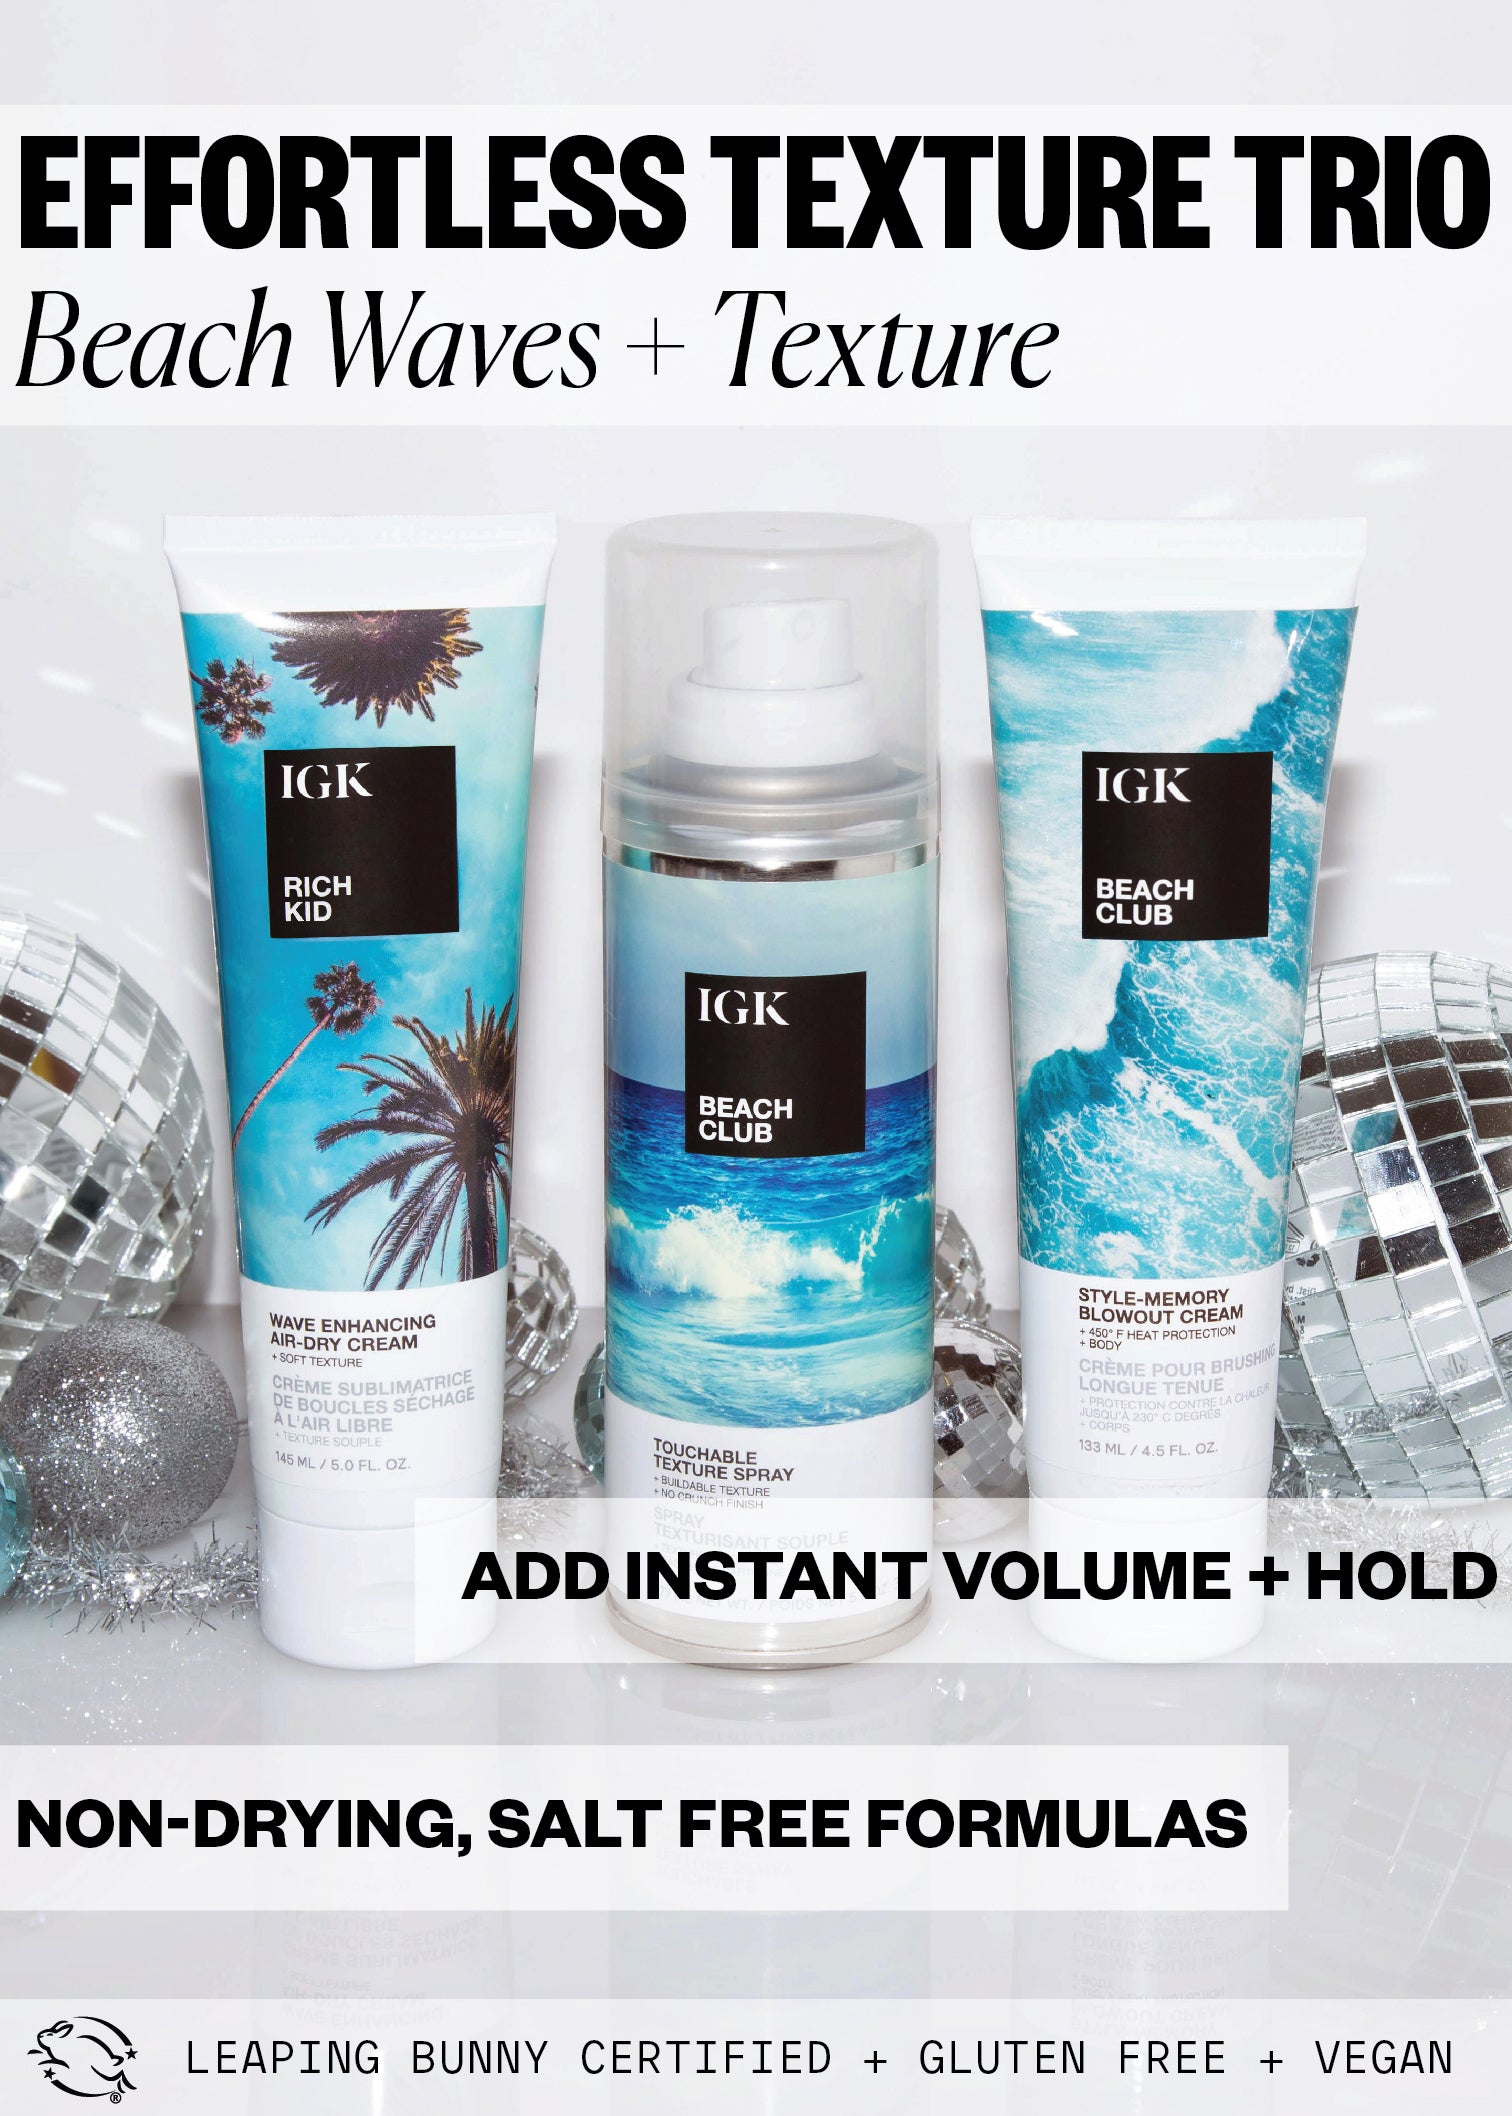  IGK BEACH CLUB Volumizing Texture Spray for Wavy, Curly, Dry  Hair, Vegan, Cruelty-Free